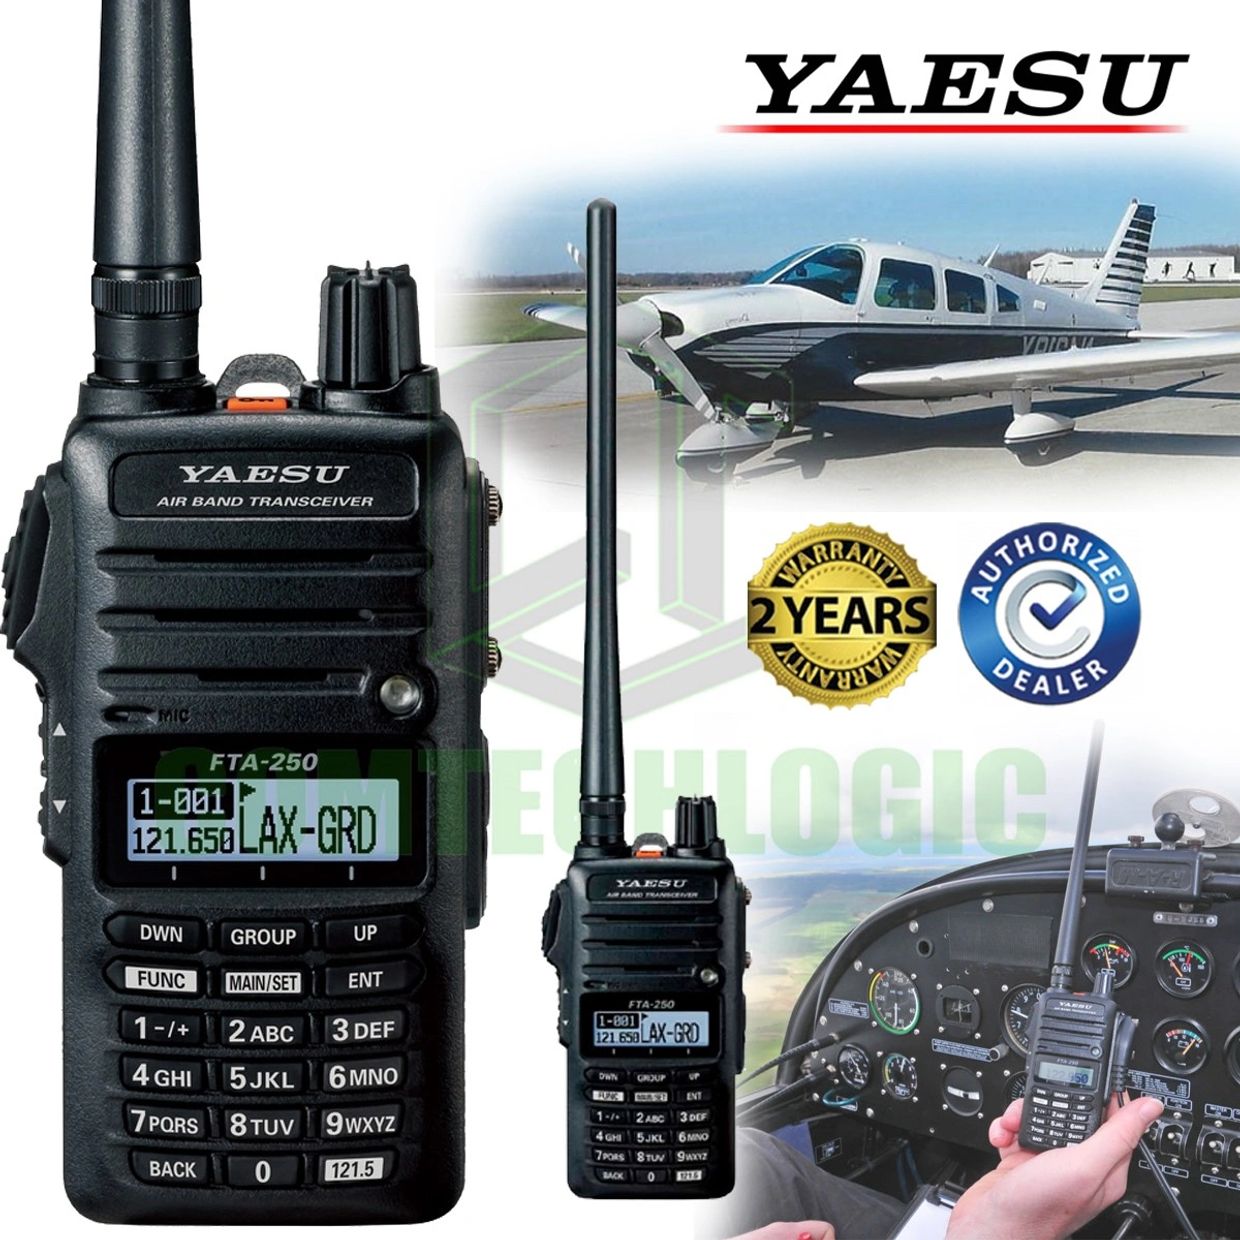 Yaesu aviation band radios